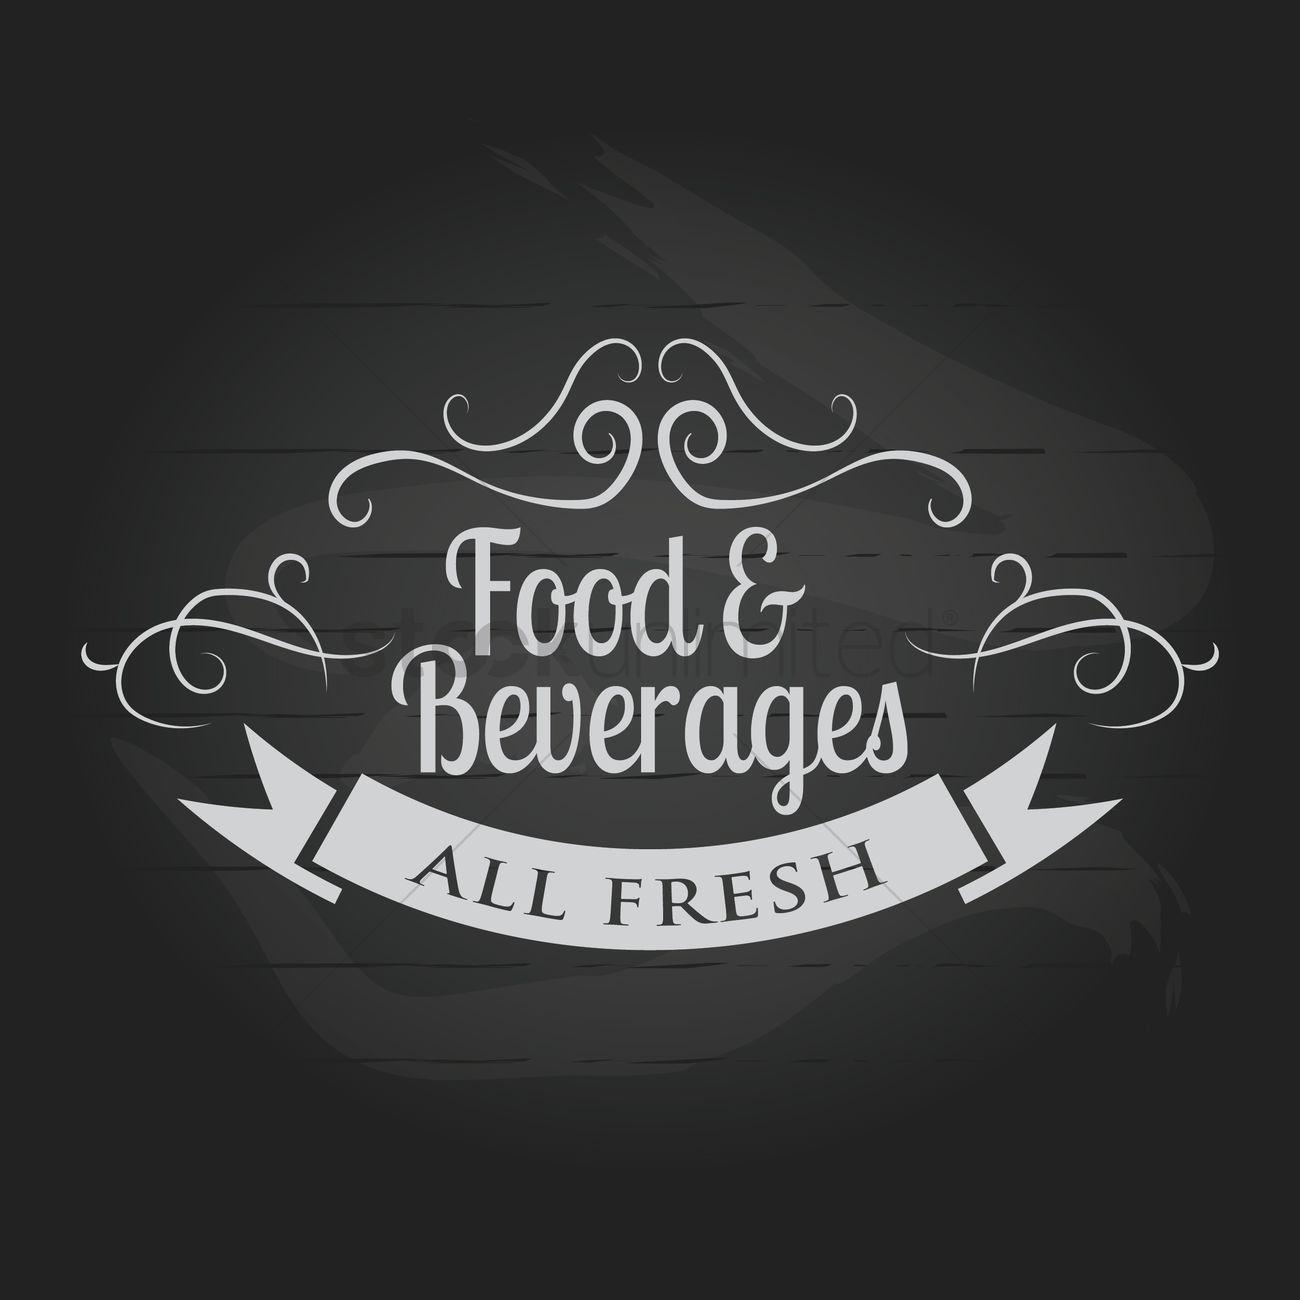 Food and Beverage Logo - Food and beverages menu design Vector Image - 1705949 | StockUnlimited